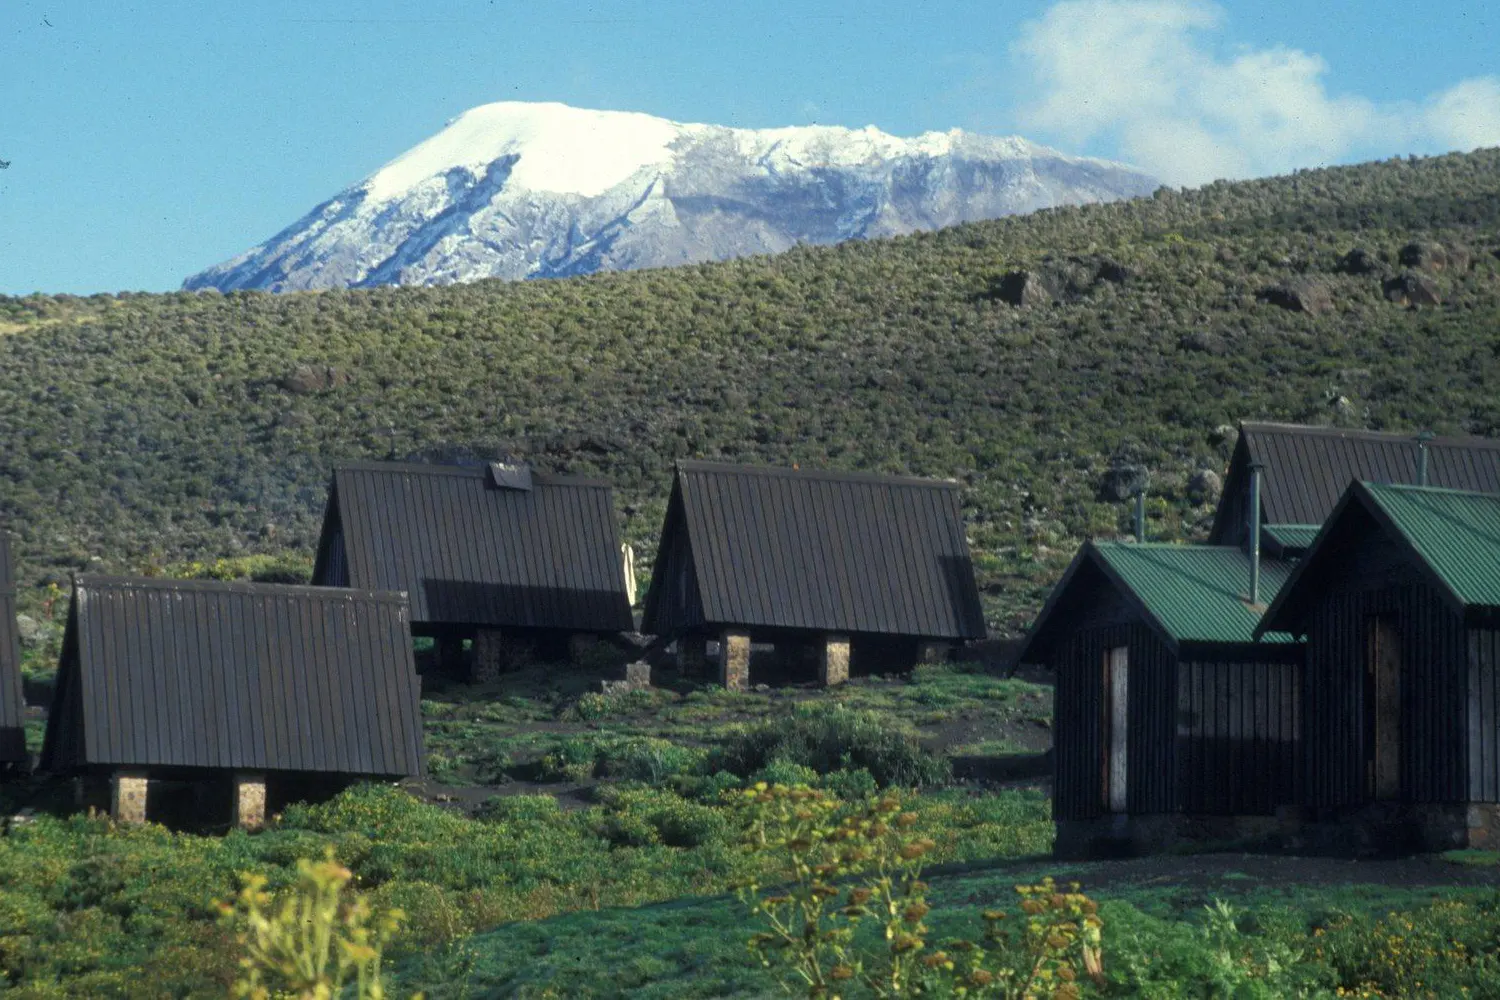 How hard is it to climb Mount Kilimanjaro